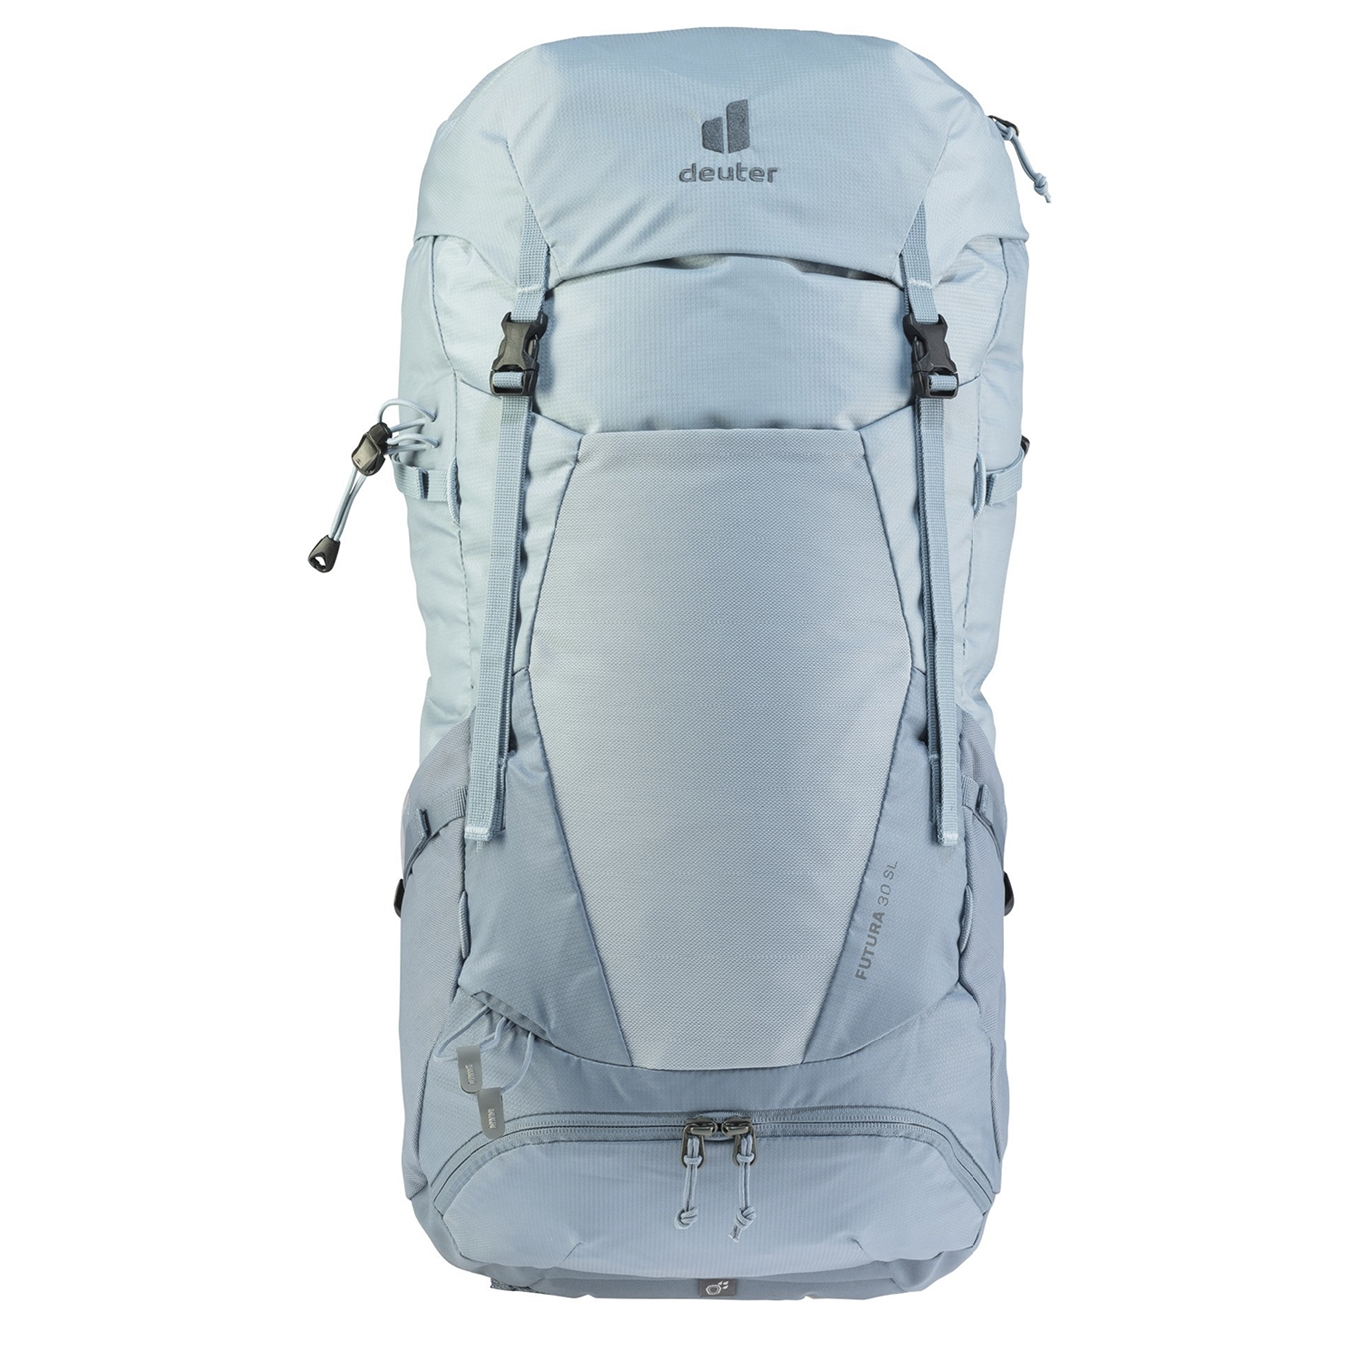 Deuter Futura 30 SL Backpack dusk/slate-blue backpack